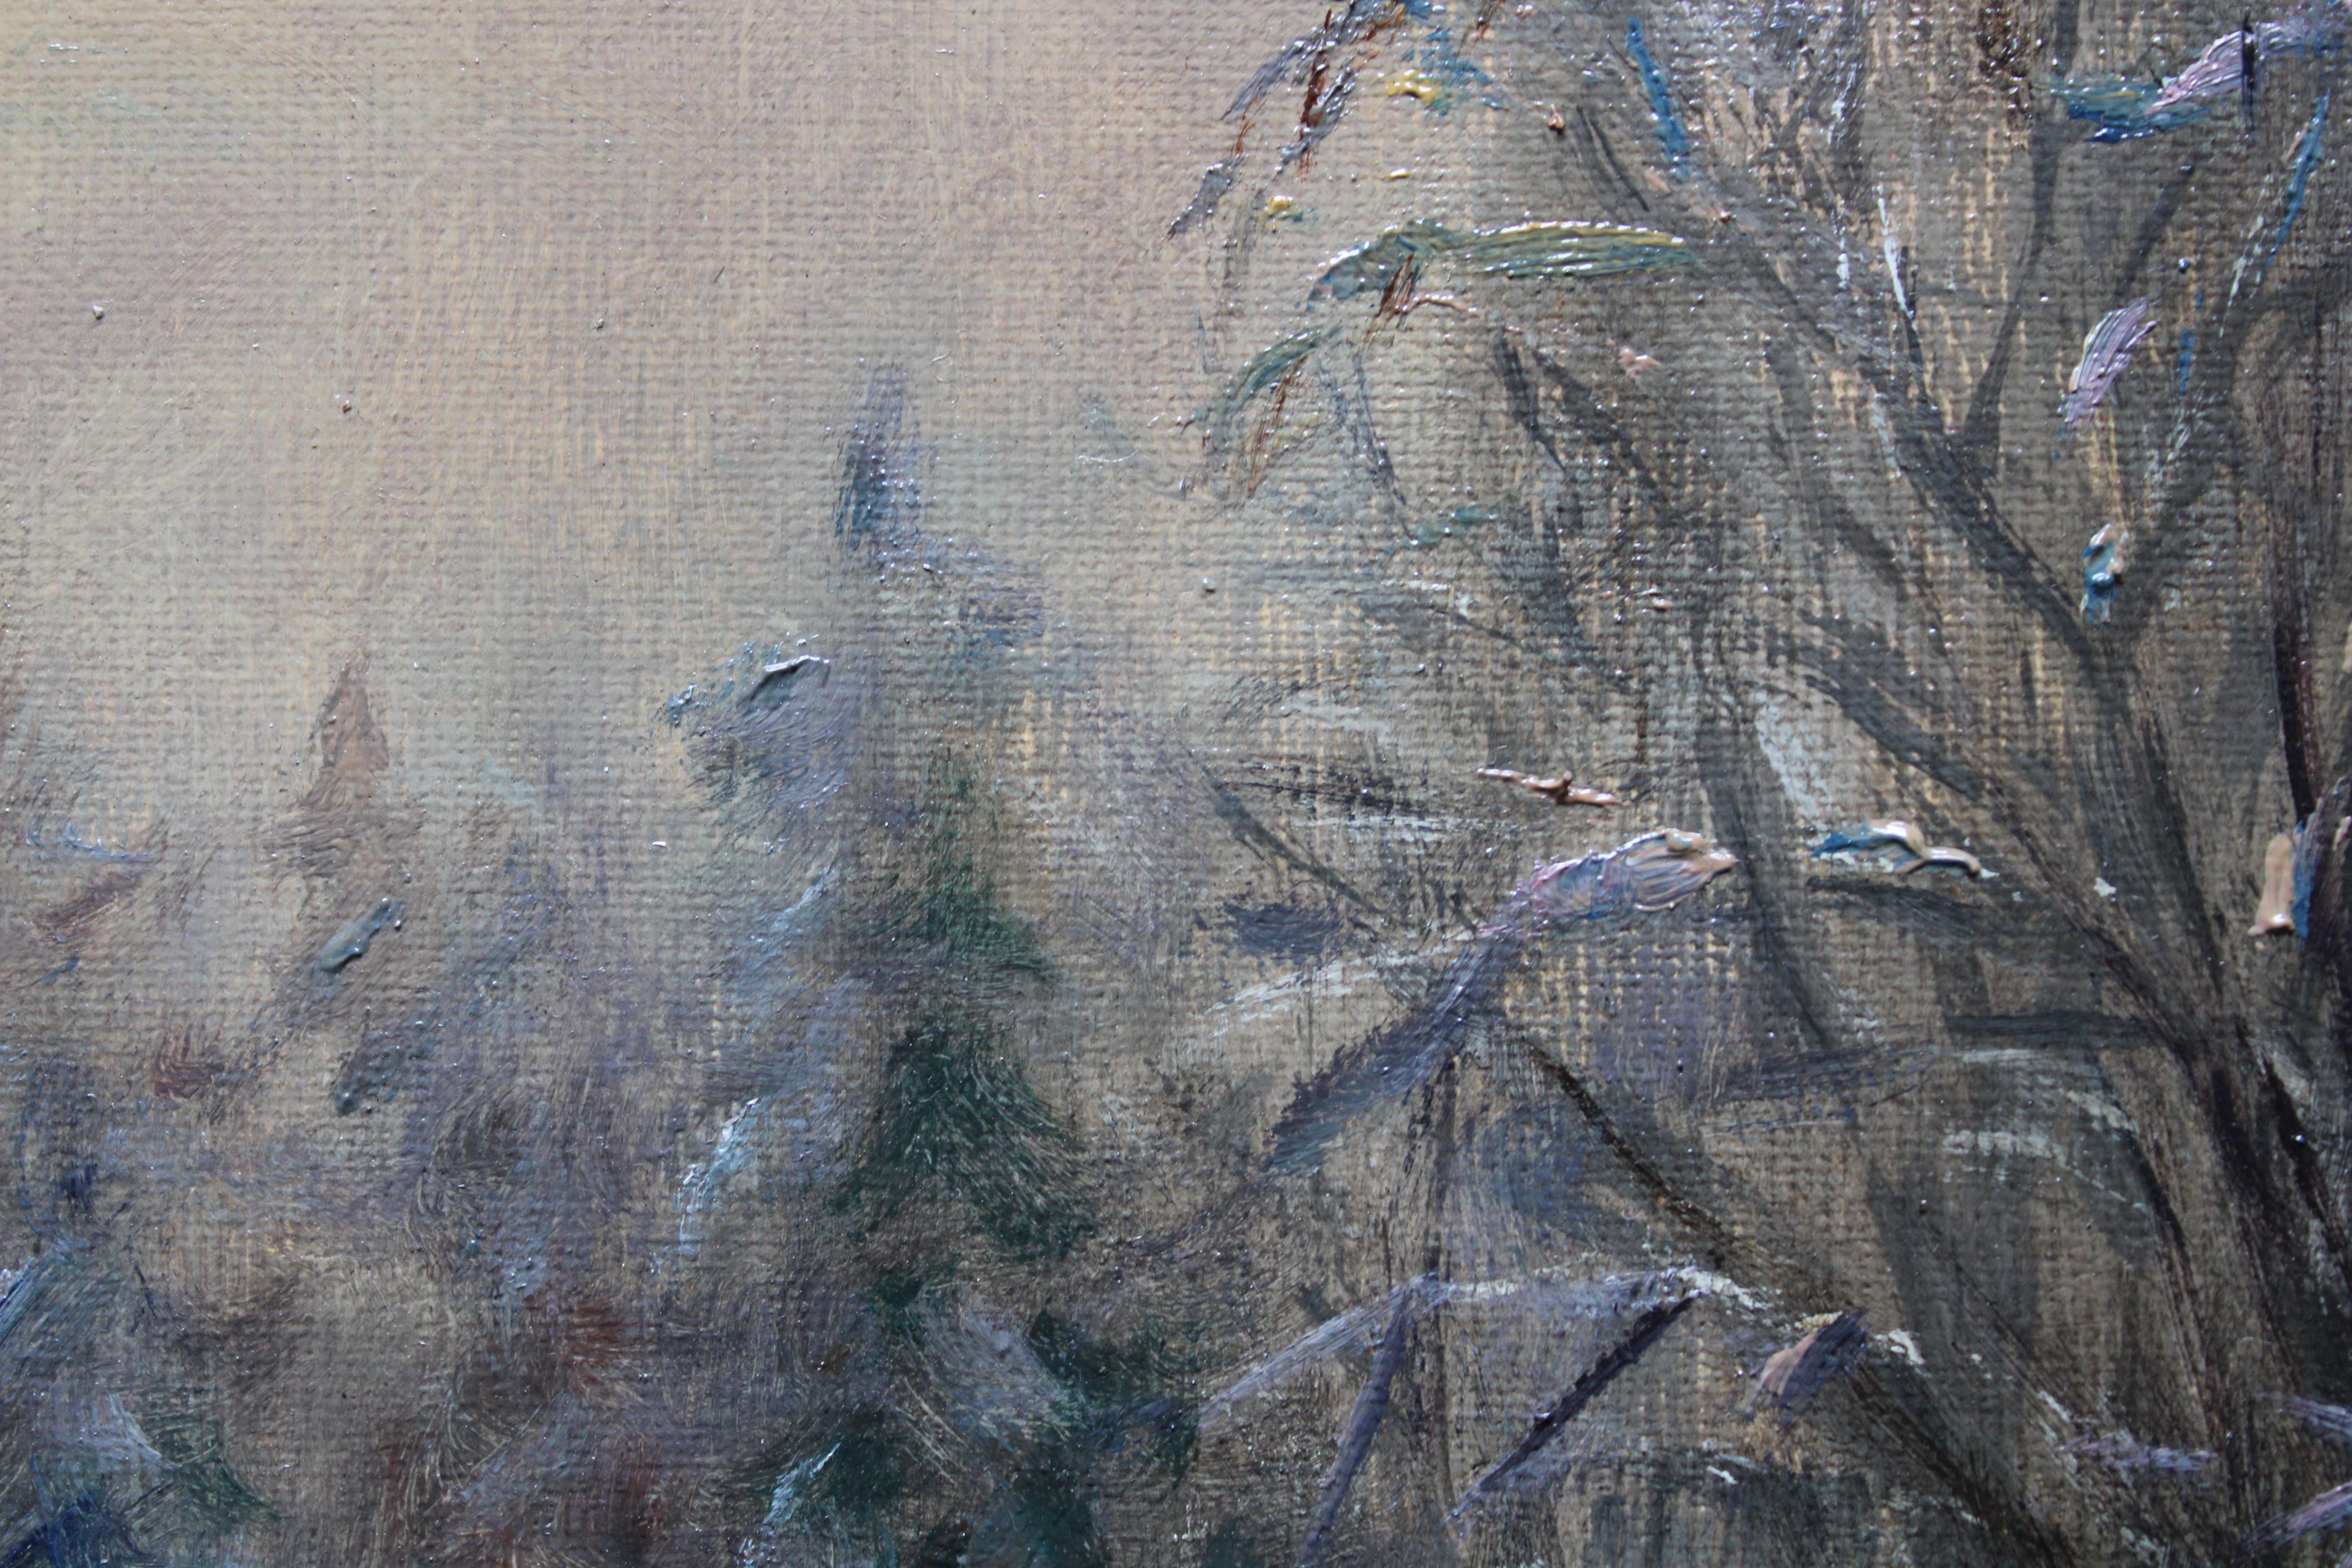 Winter evening. Church 2011. Oil on canvas. 40x50 cm 

